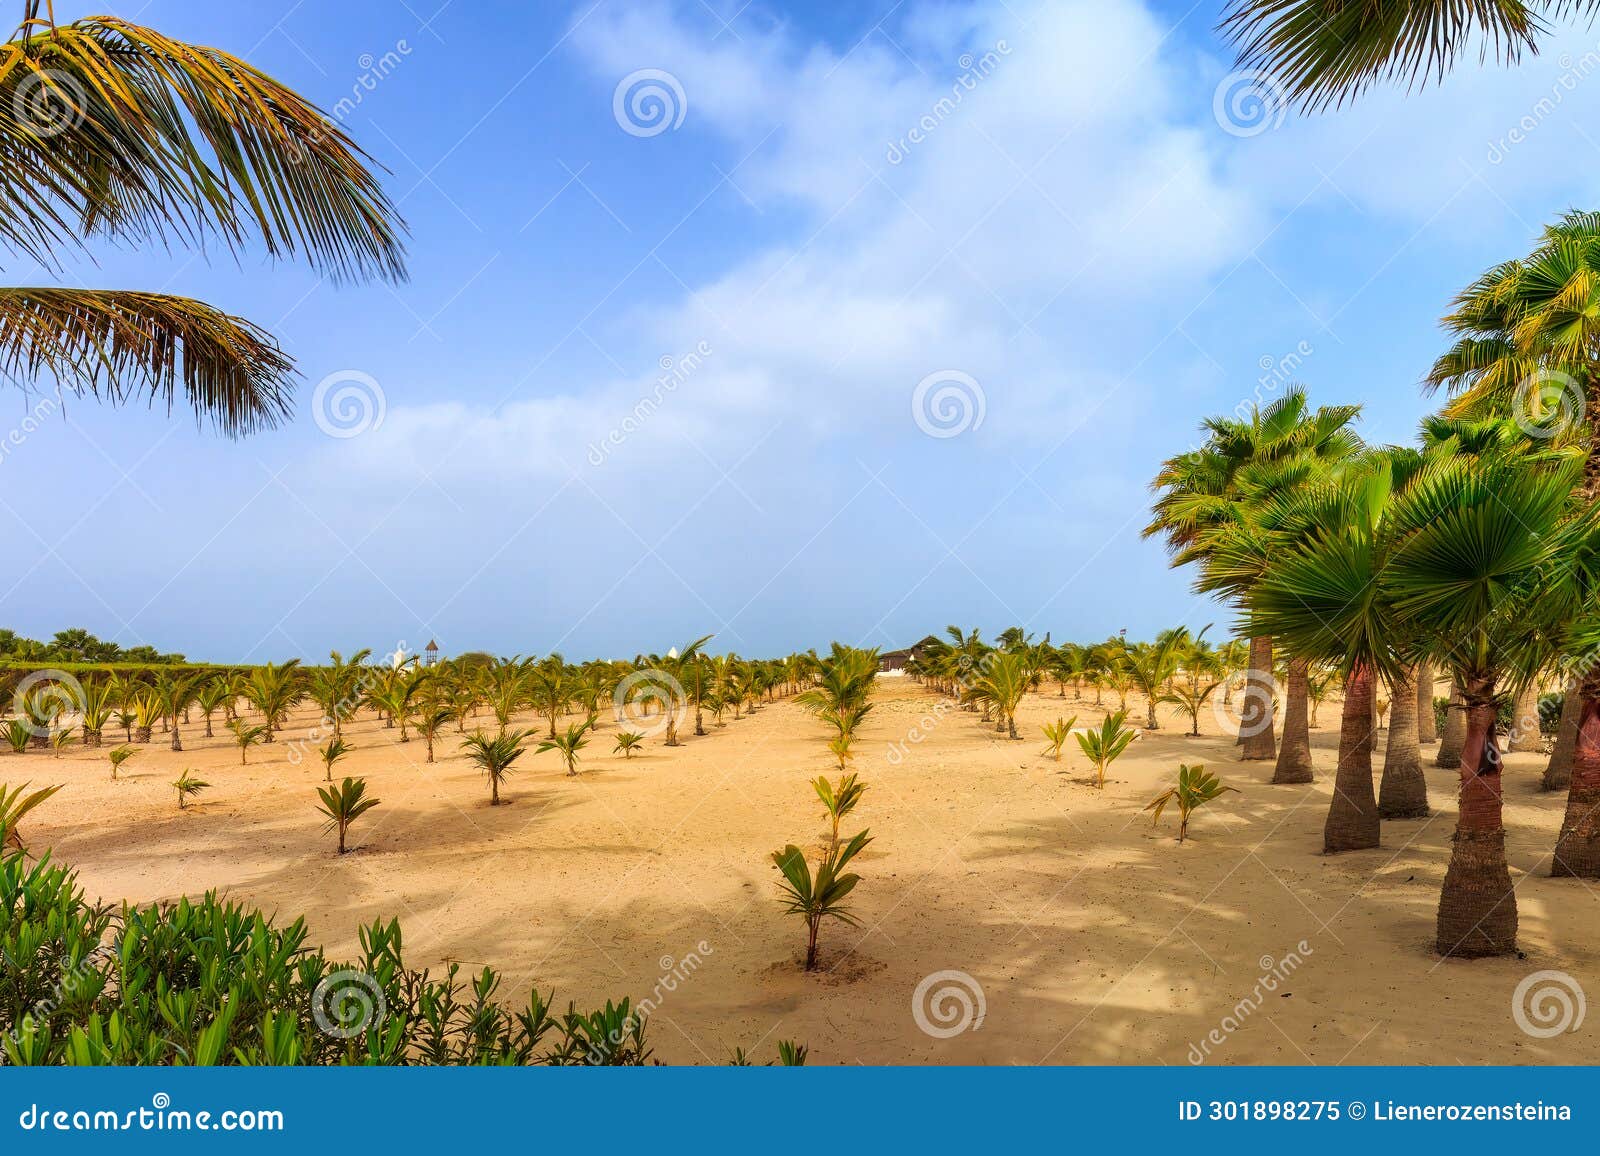 boa vista cape verde - palm trees in desert landscape